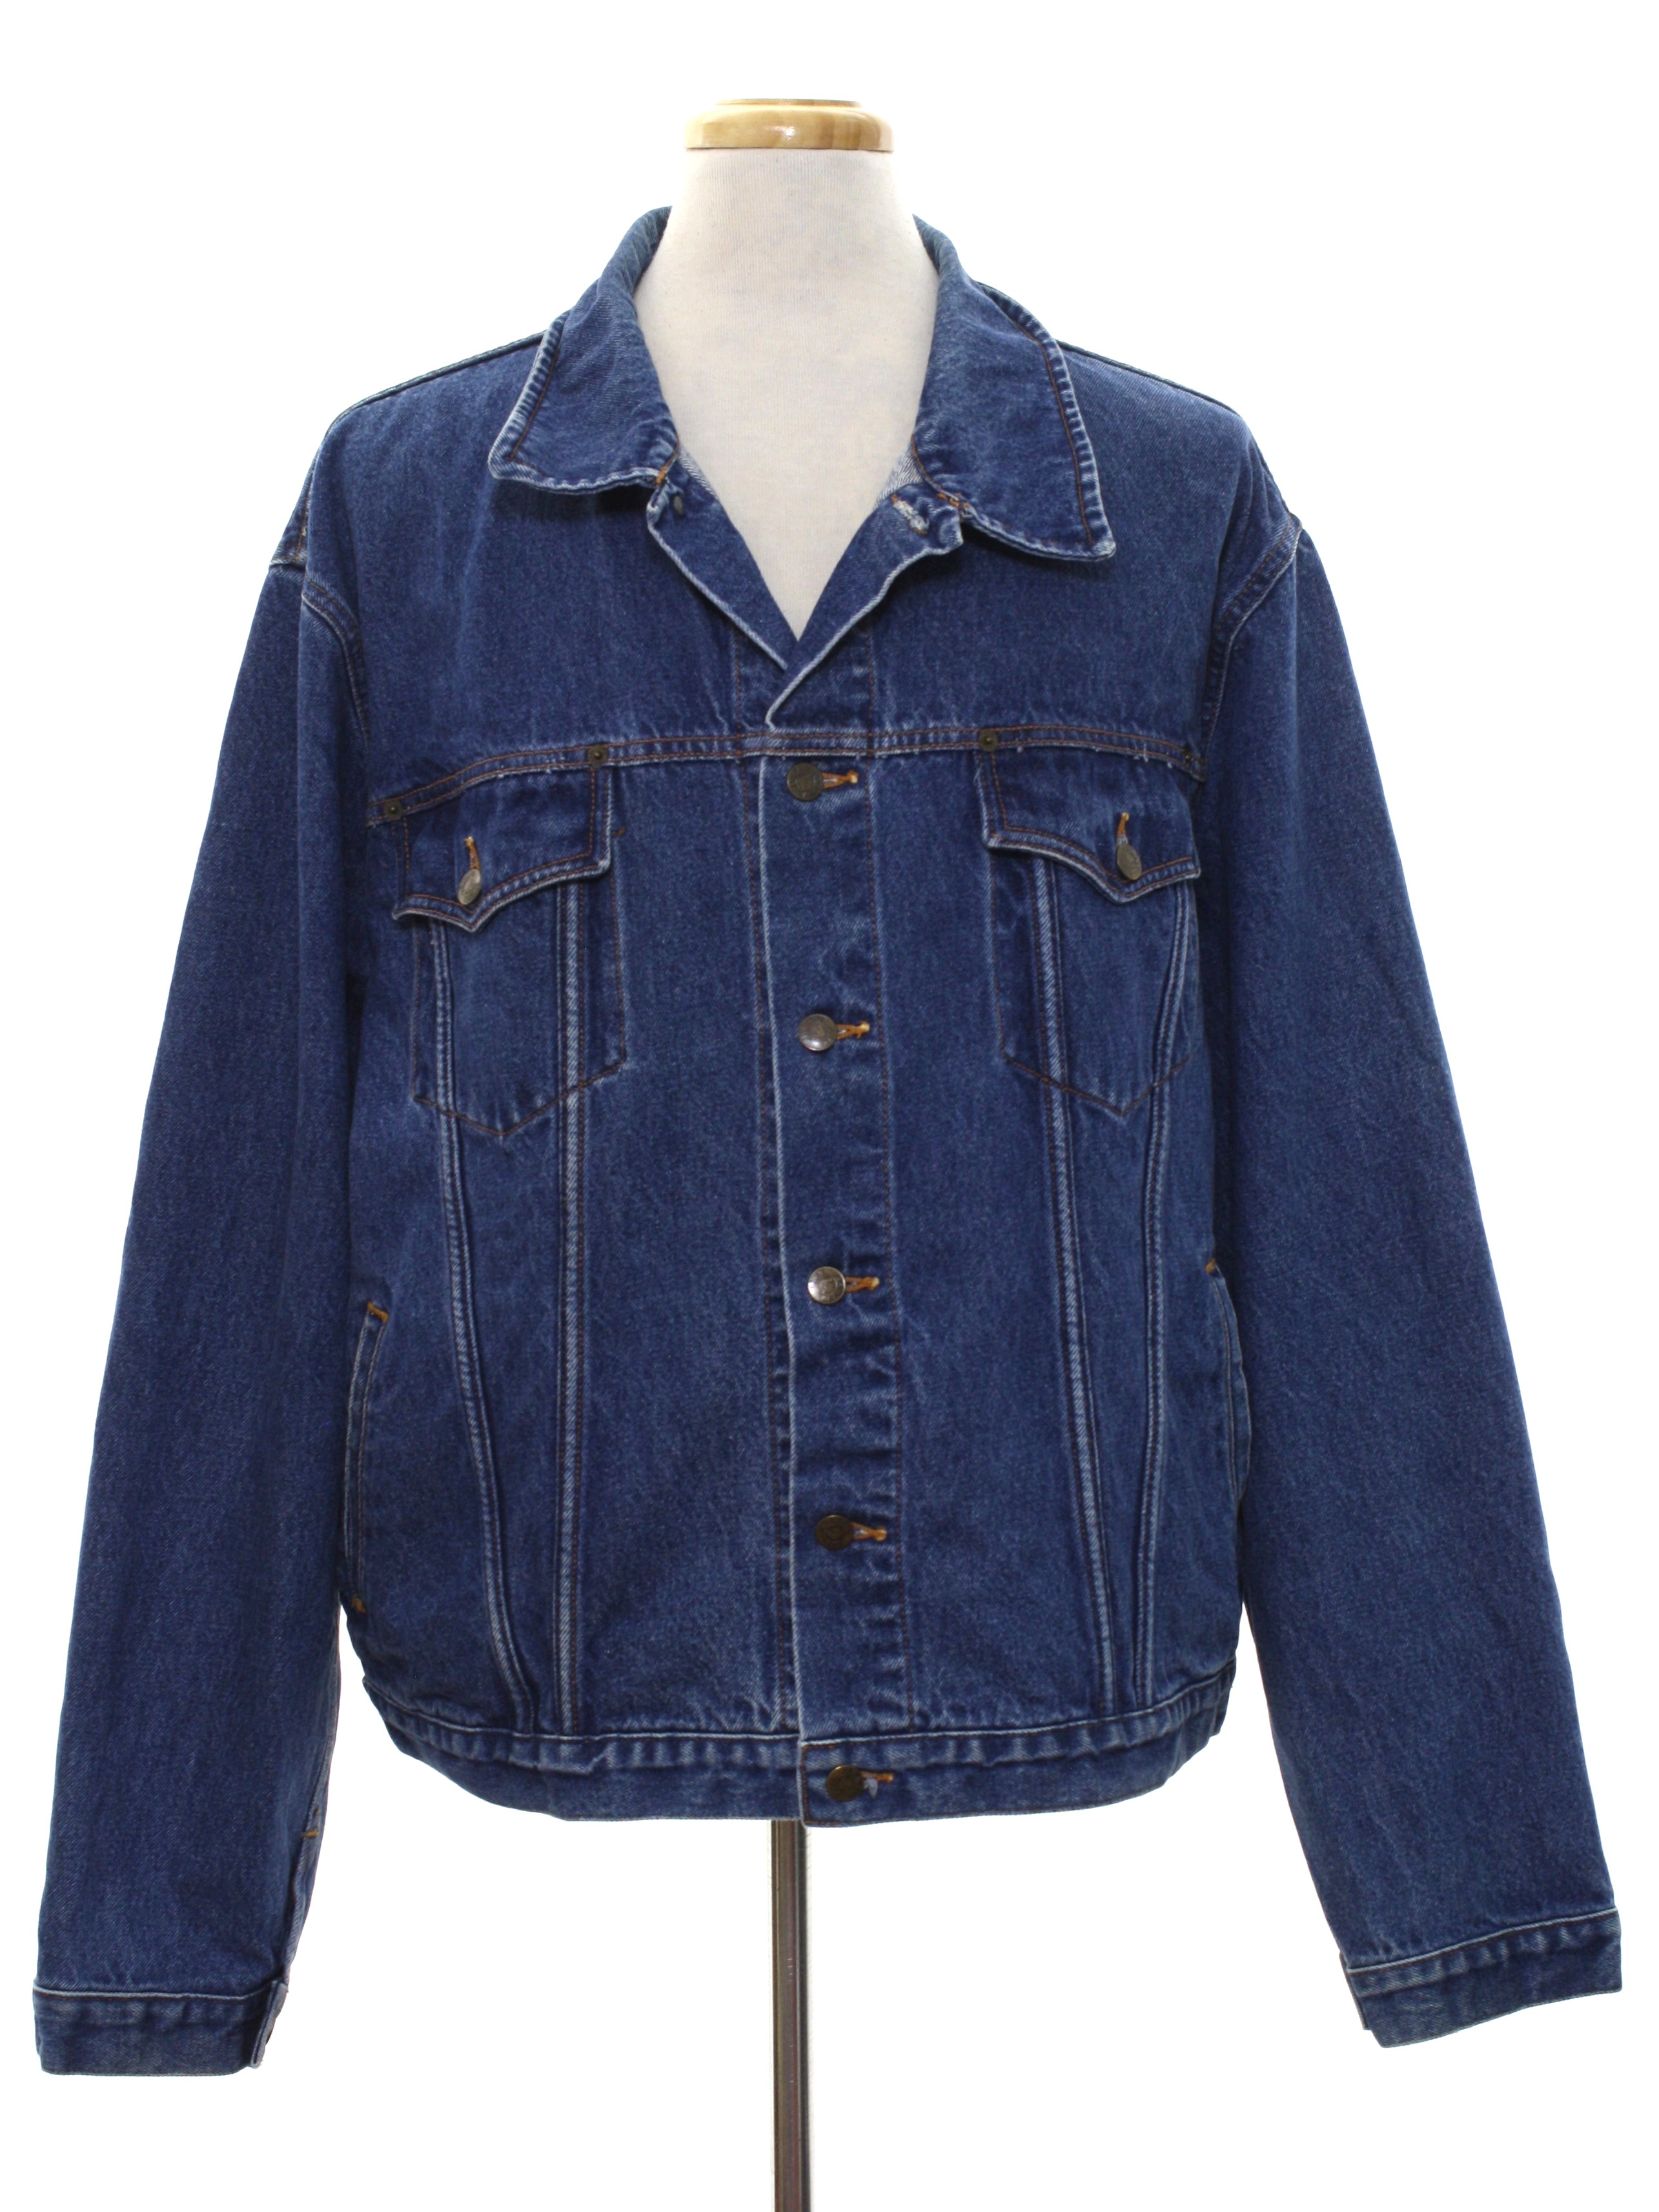 Retro Nineties Jacket: Early 90s -Armani Jeans- Mens dark blue ...